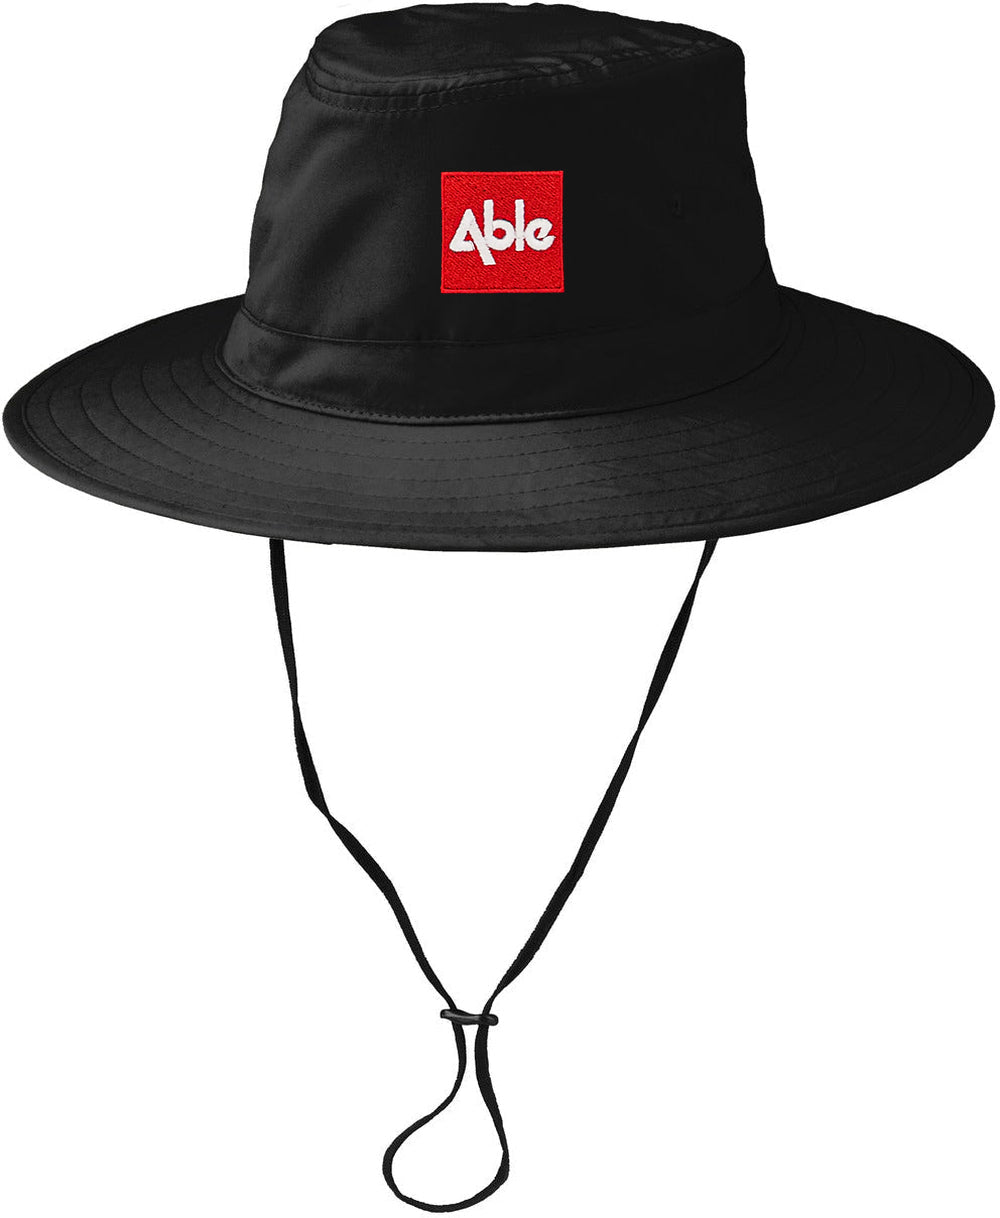 Construction Helmet Bucket Hat, Embroidered Bucket Hat, Handmade Unisex Adult Cotton Sun Hat, Summer Hat Gift - Multiple Colors